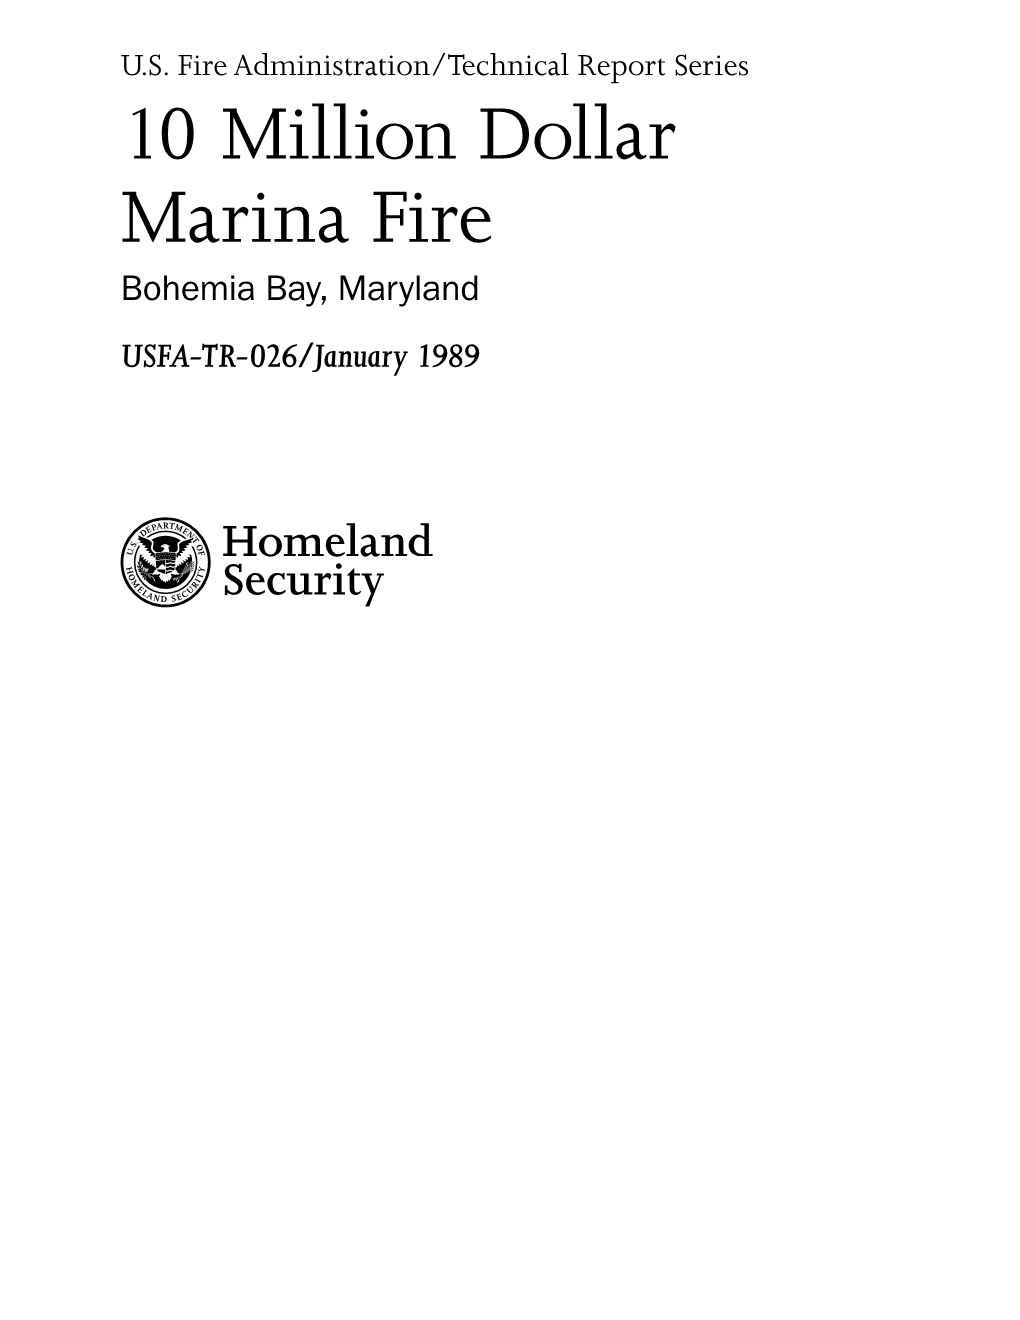 TR-026 10 Million Dollar Marina Fire